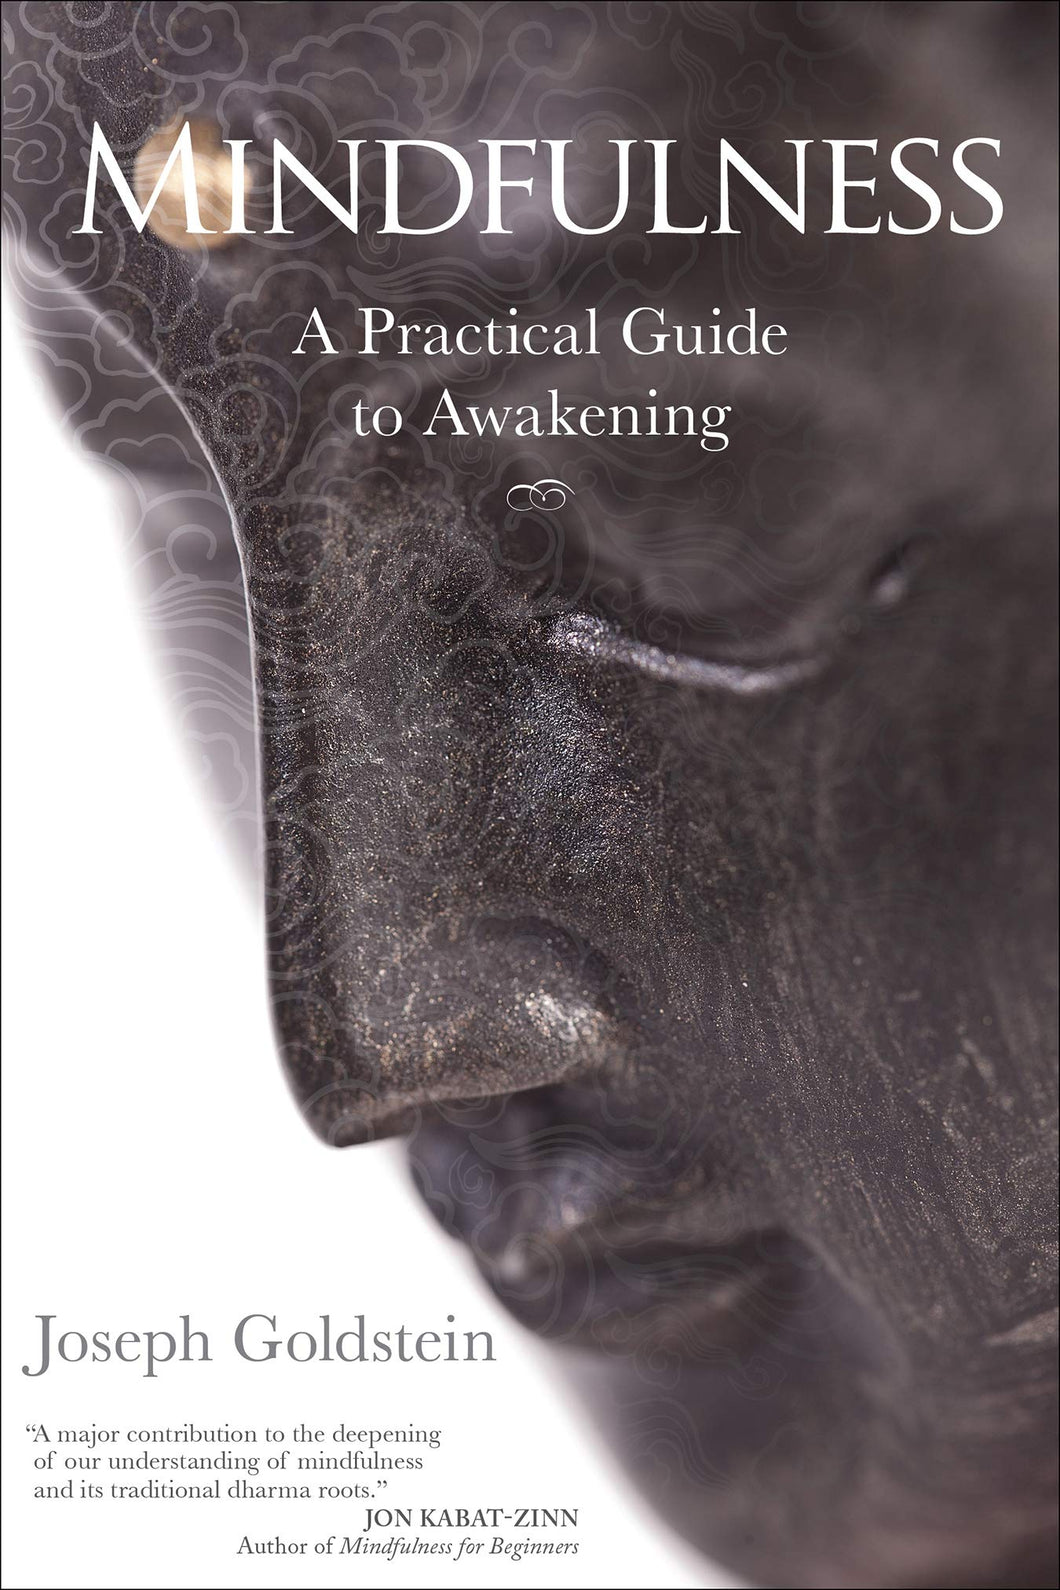 Mindfulness: A Practical Guide To Awakening [Joseph Goldstein]